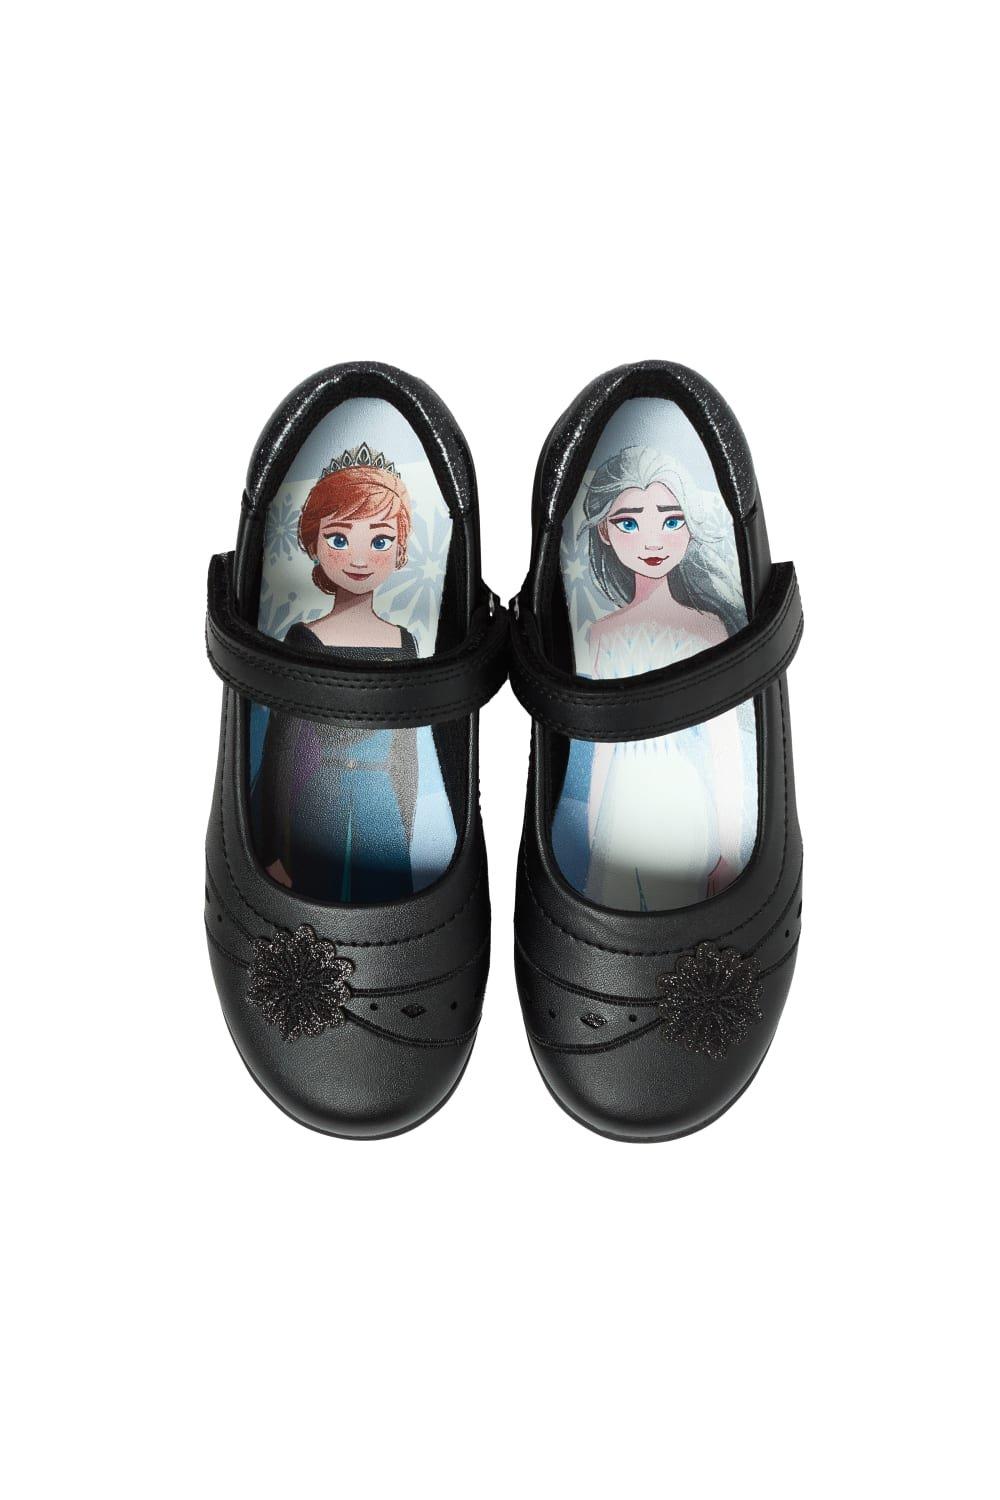 Frozen School Shoes